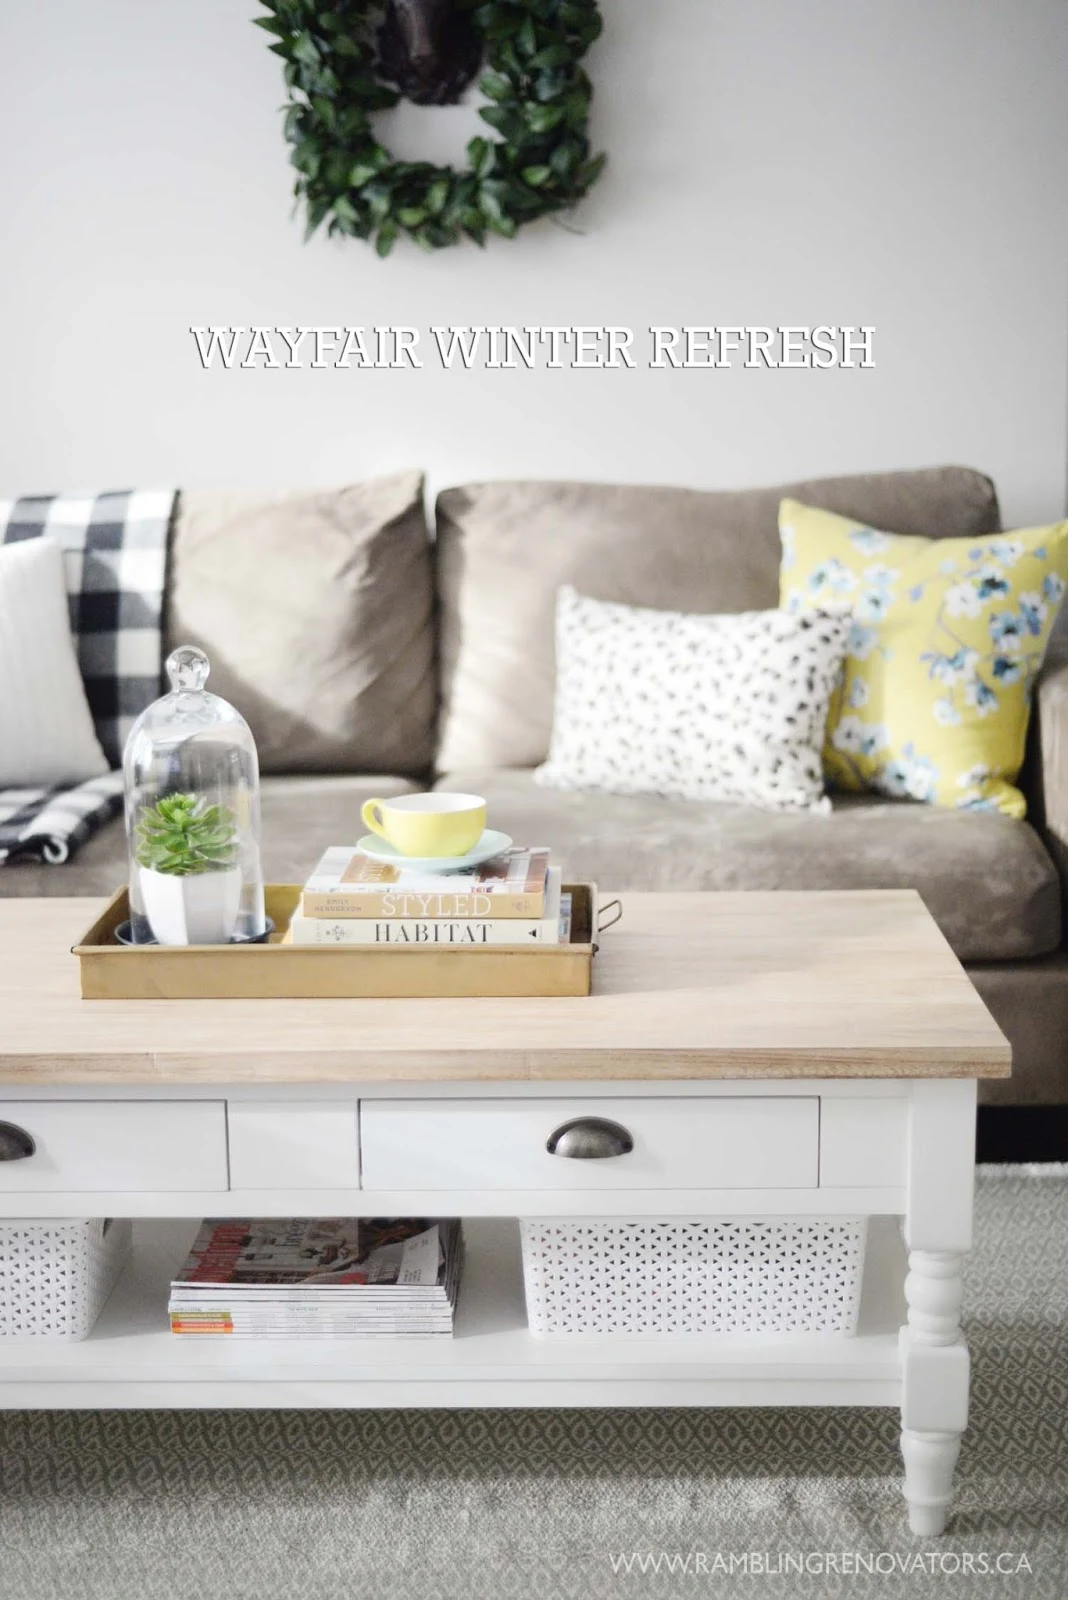 Wayfair Winter Refresh | natural wood and white painted coffee table | yellow teal white | RamblingRenovators.ca